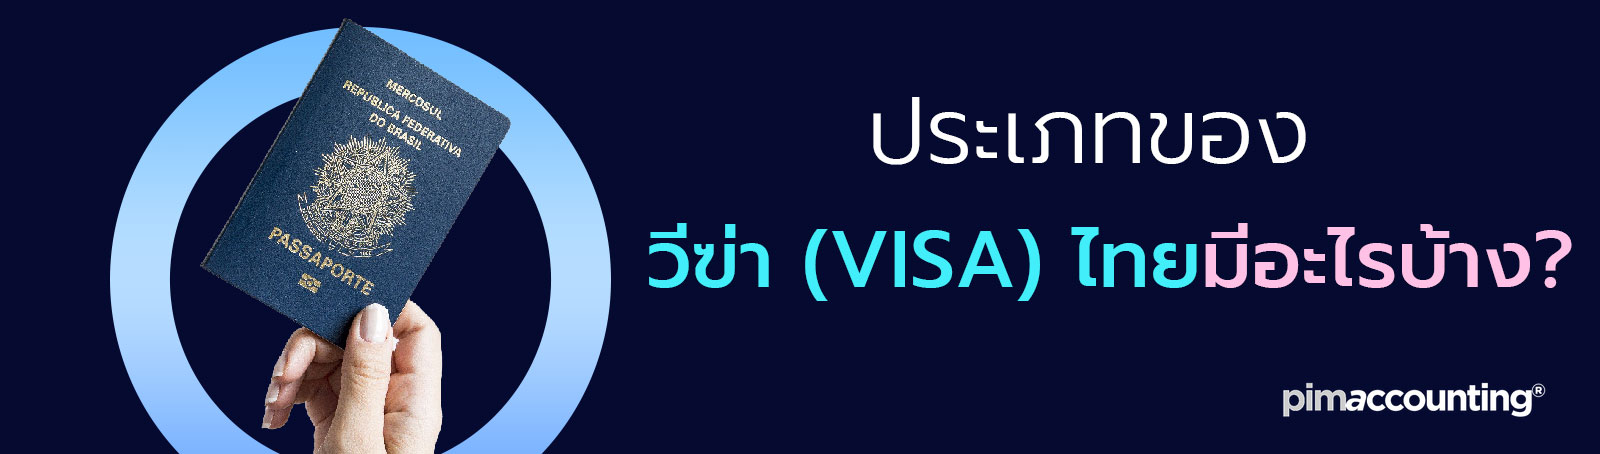 Types of Visa - ประเภทของวีซ่าไทย